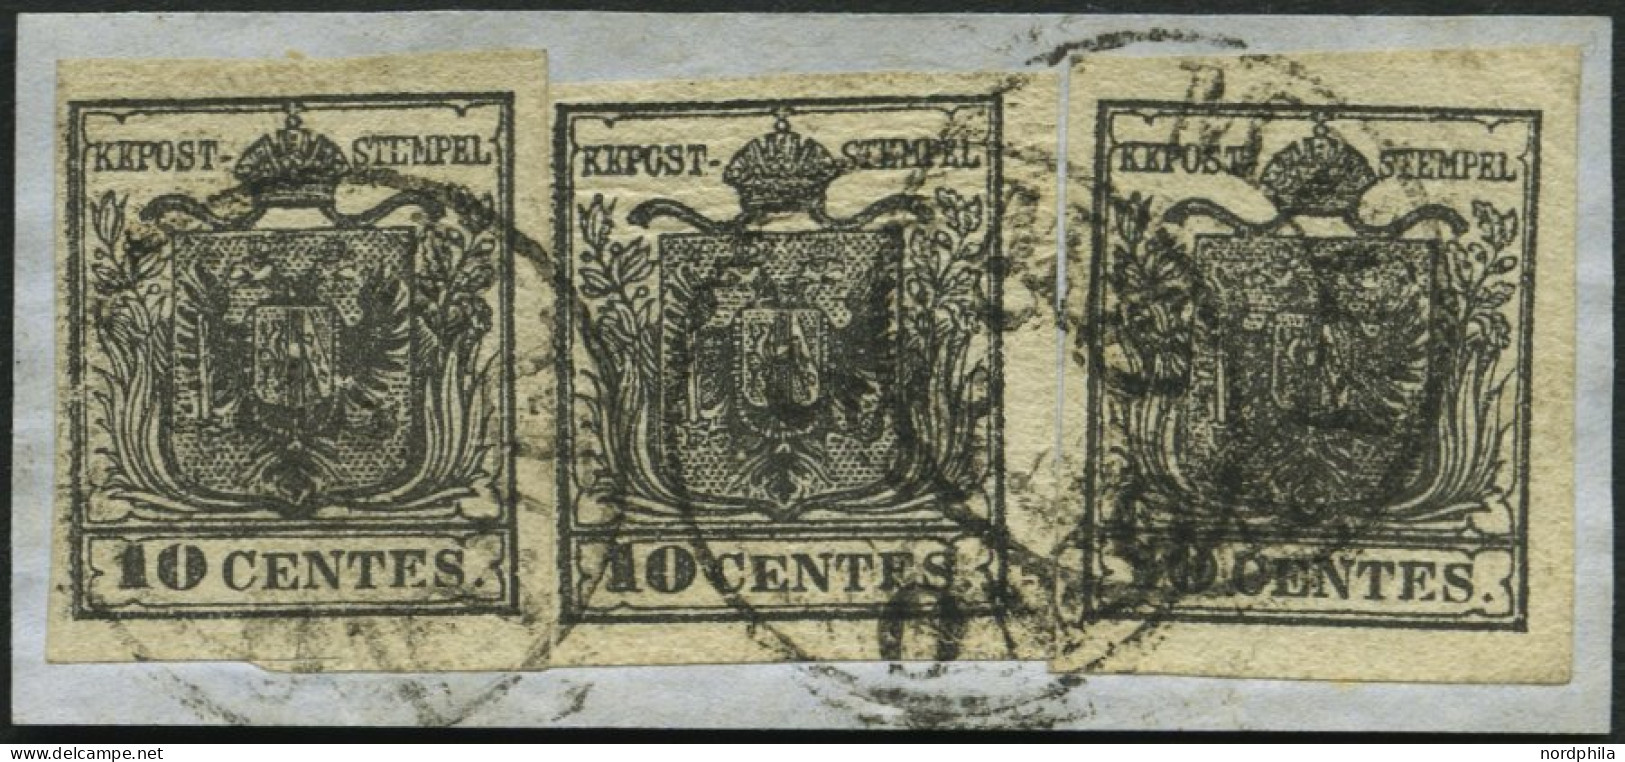 LOMBARDEI UND VENETIEN 2Xa BrfStk, 1850, 10 C. Schwarz, Handpapier, Type Ib, Ia, Ia, Dreifachfrankatur Auf Prachtbriefst - Lombardo-Venetien